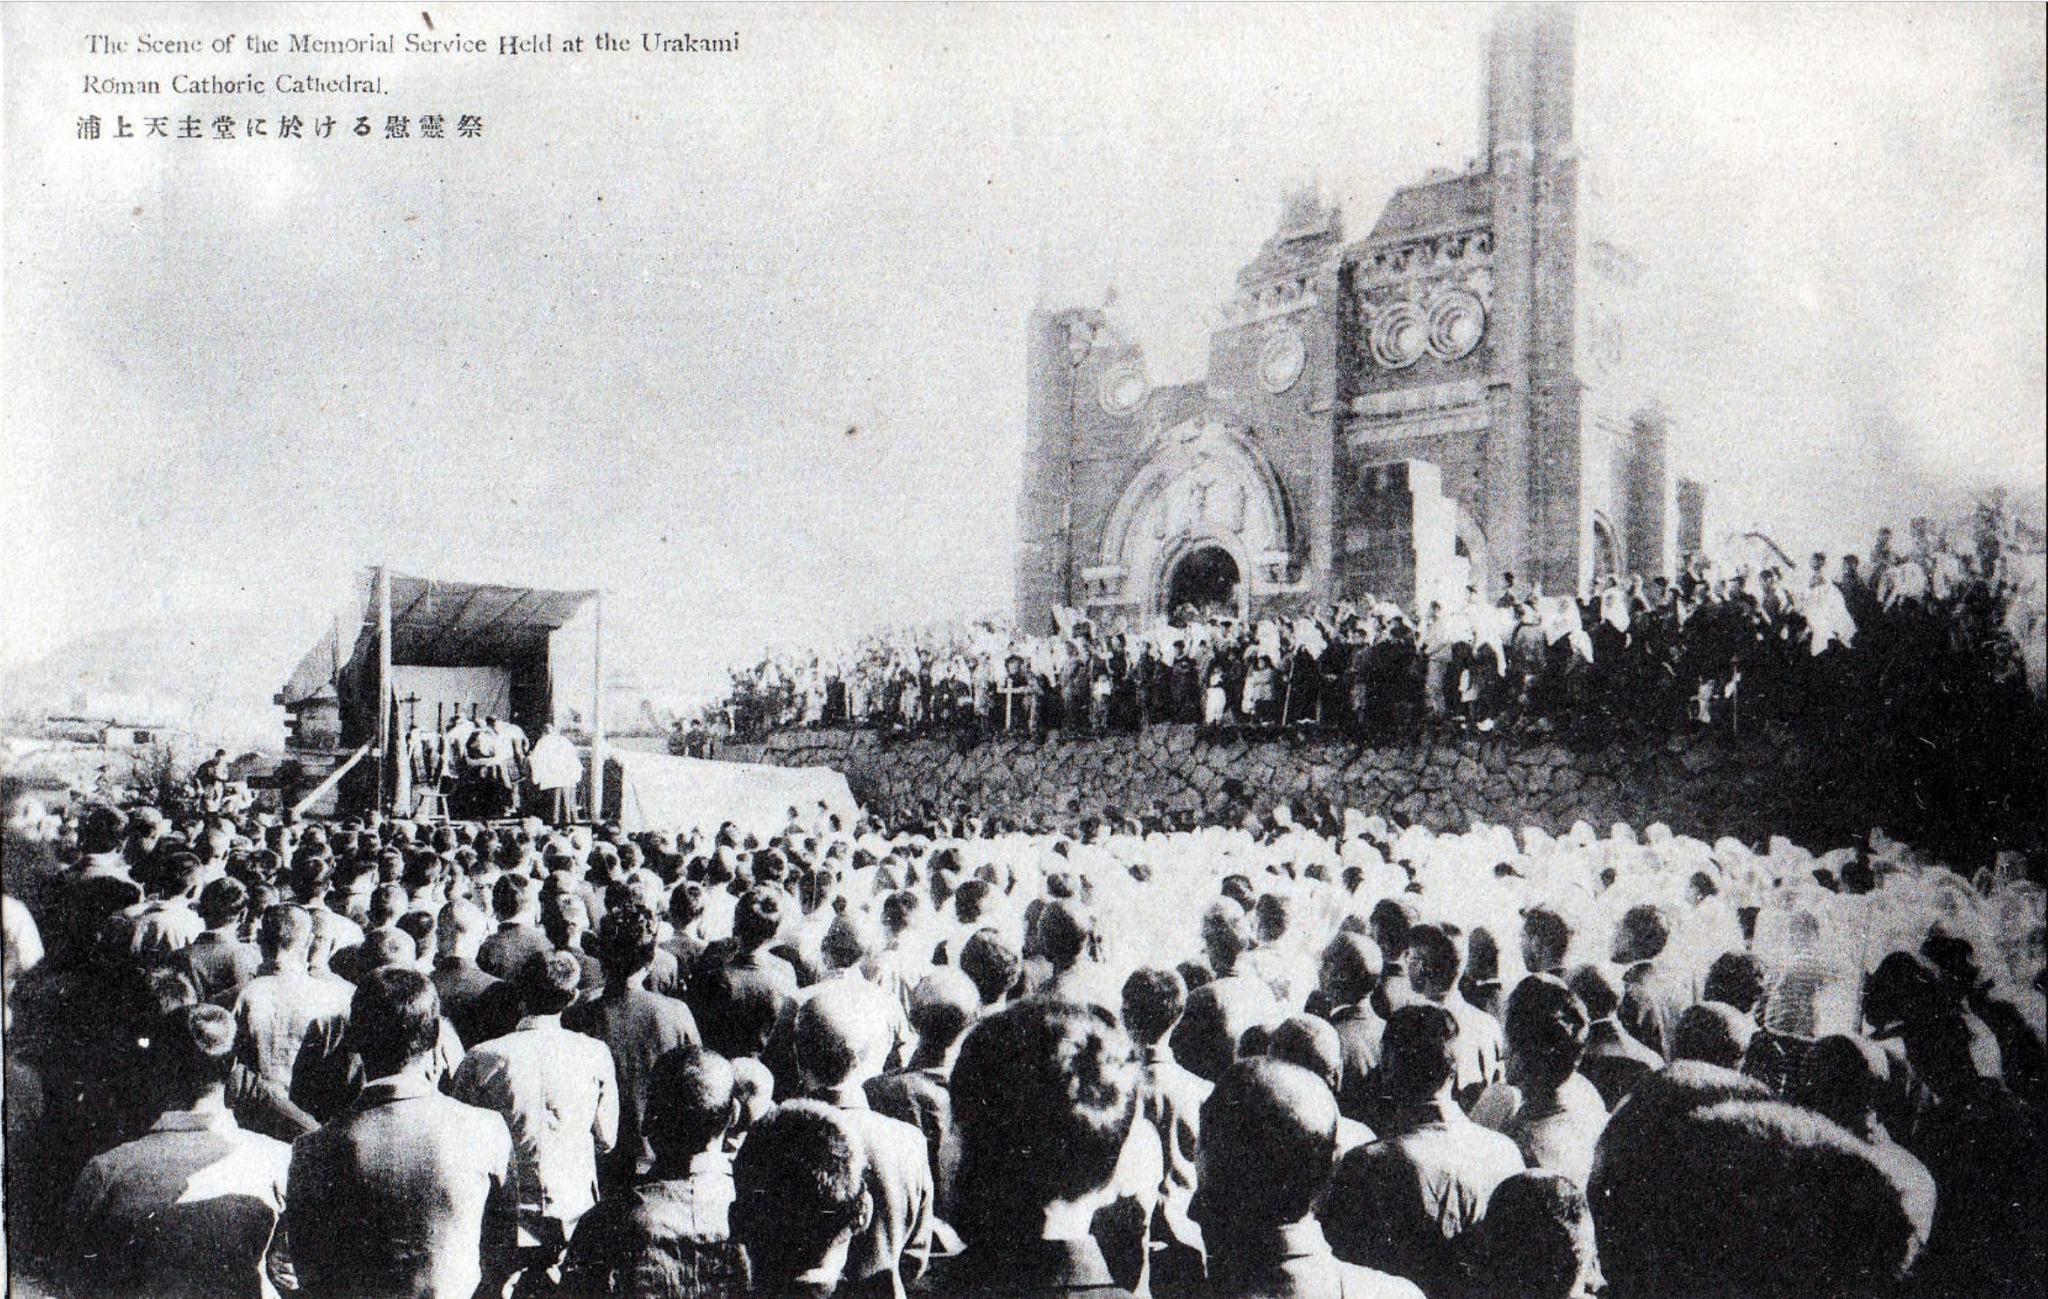 A memorial service being held near the atomic-bombed Urakami Cathedral. Credit: Nagasaki City Office / sensai via Wikimedia Commons.